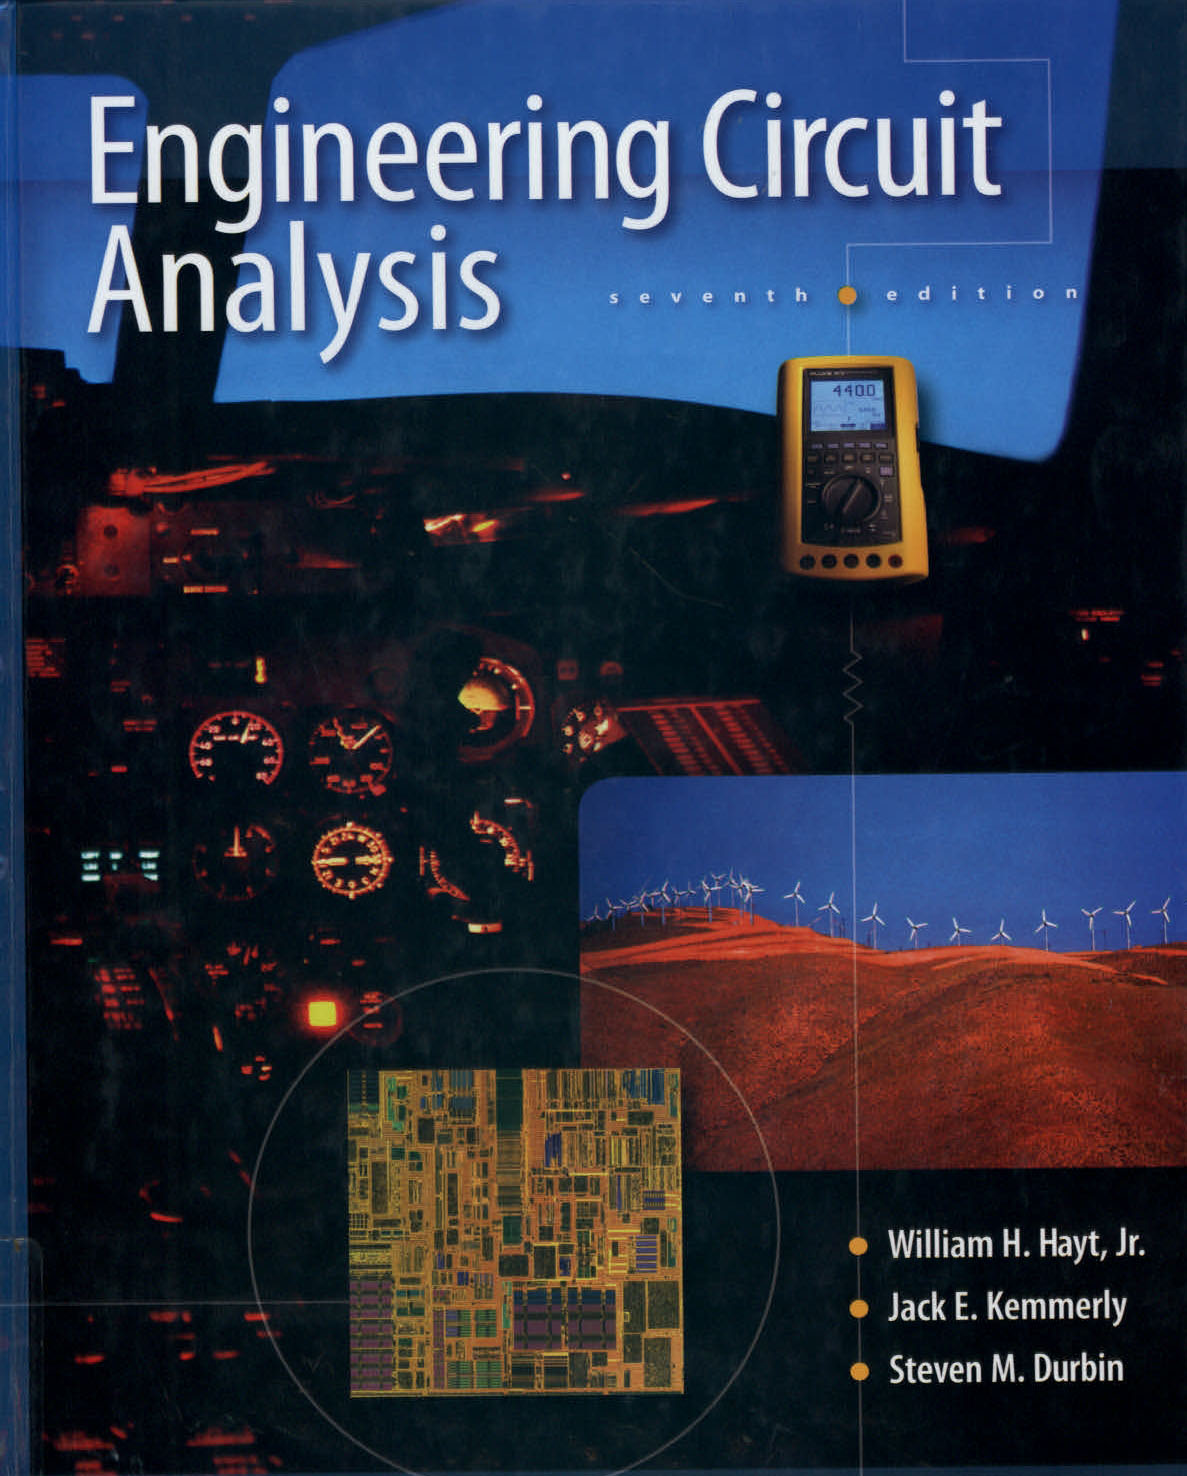 circuit analysis shape